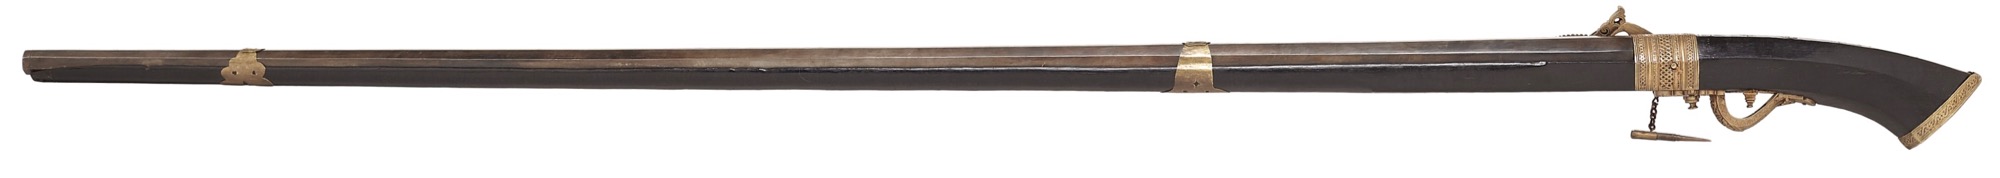 An antique Malaysian matchlock musket. www.mandarinmansion.com